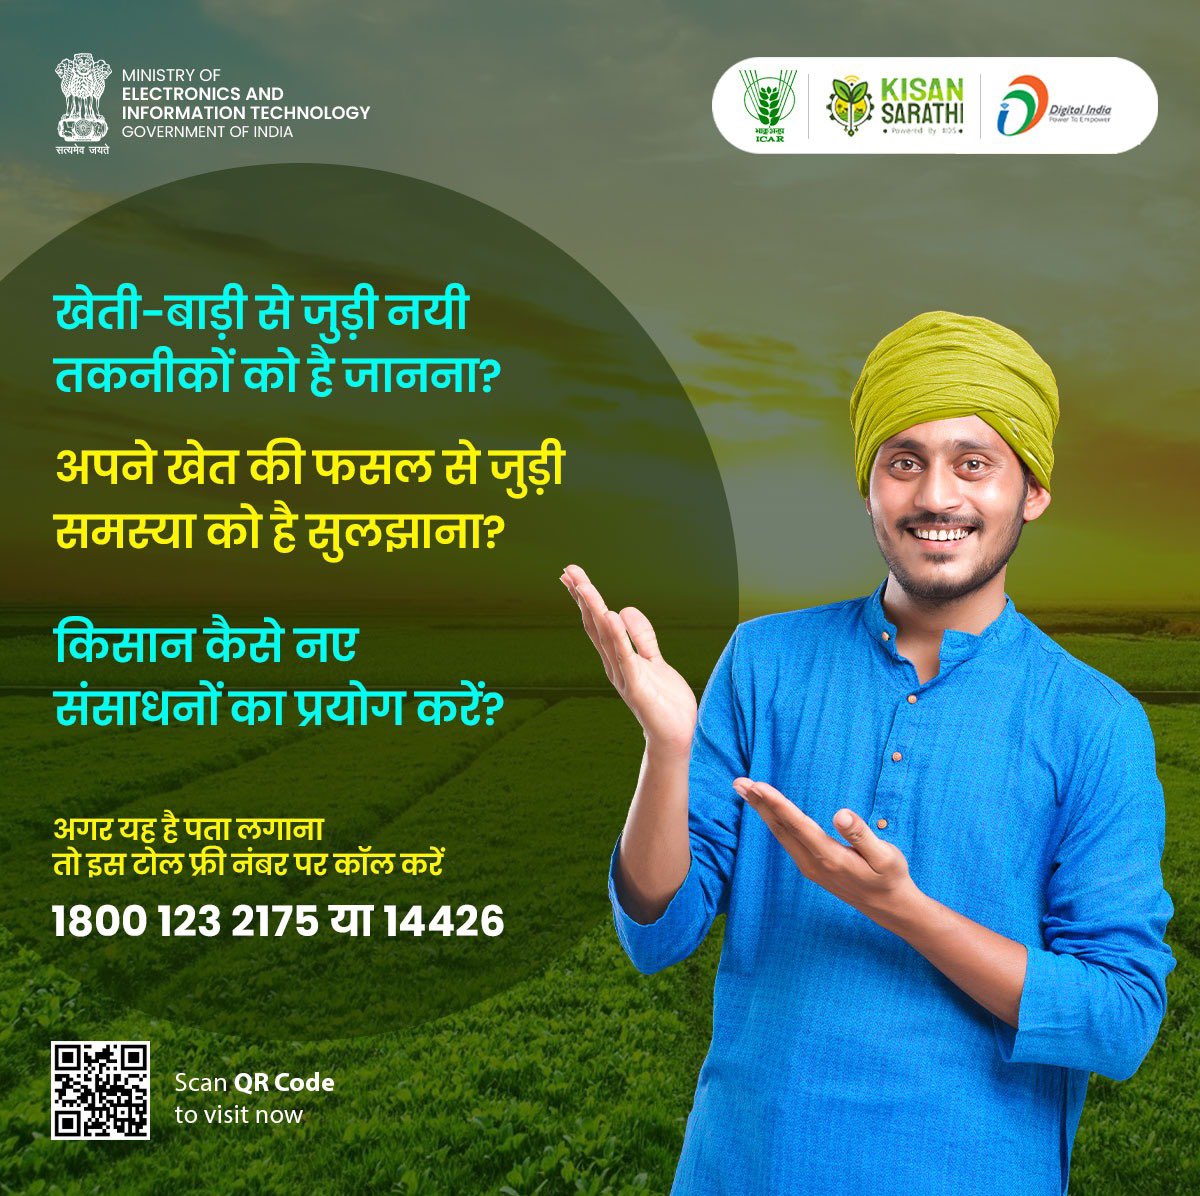 यह नंबर (1800 123 2175 or 14426) याद रखें, सही सुझाव पास रखें! #KisanSarathi  #DigitalIndia #DigitalAgriculture @GoI_MeitY @AgriGoI @DigitalIndiaCrp